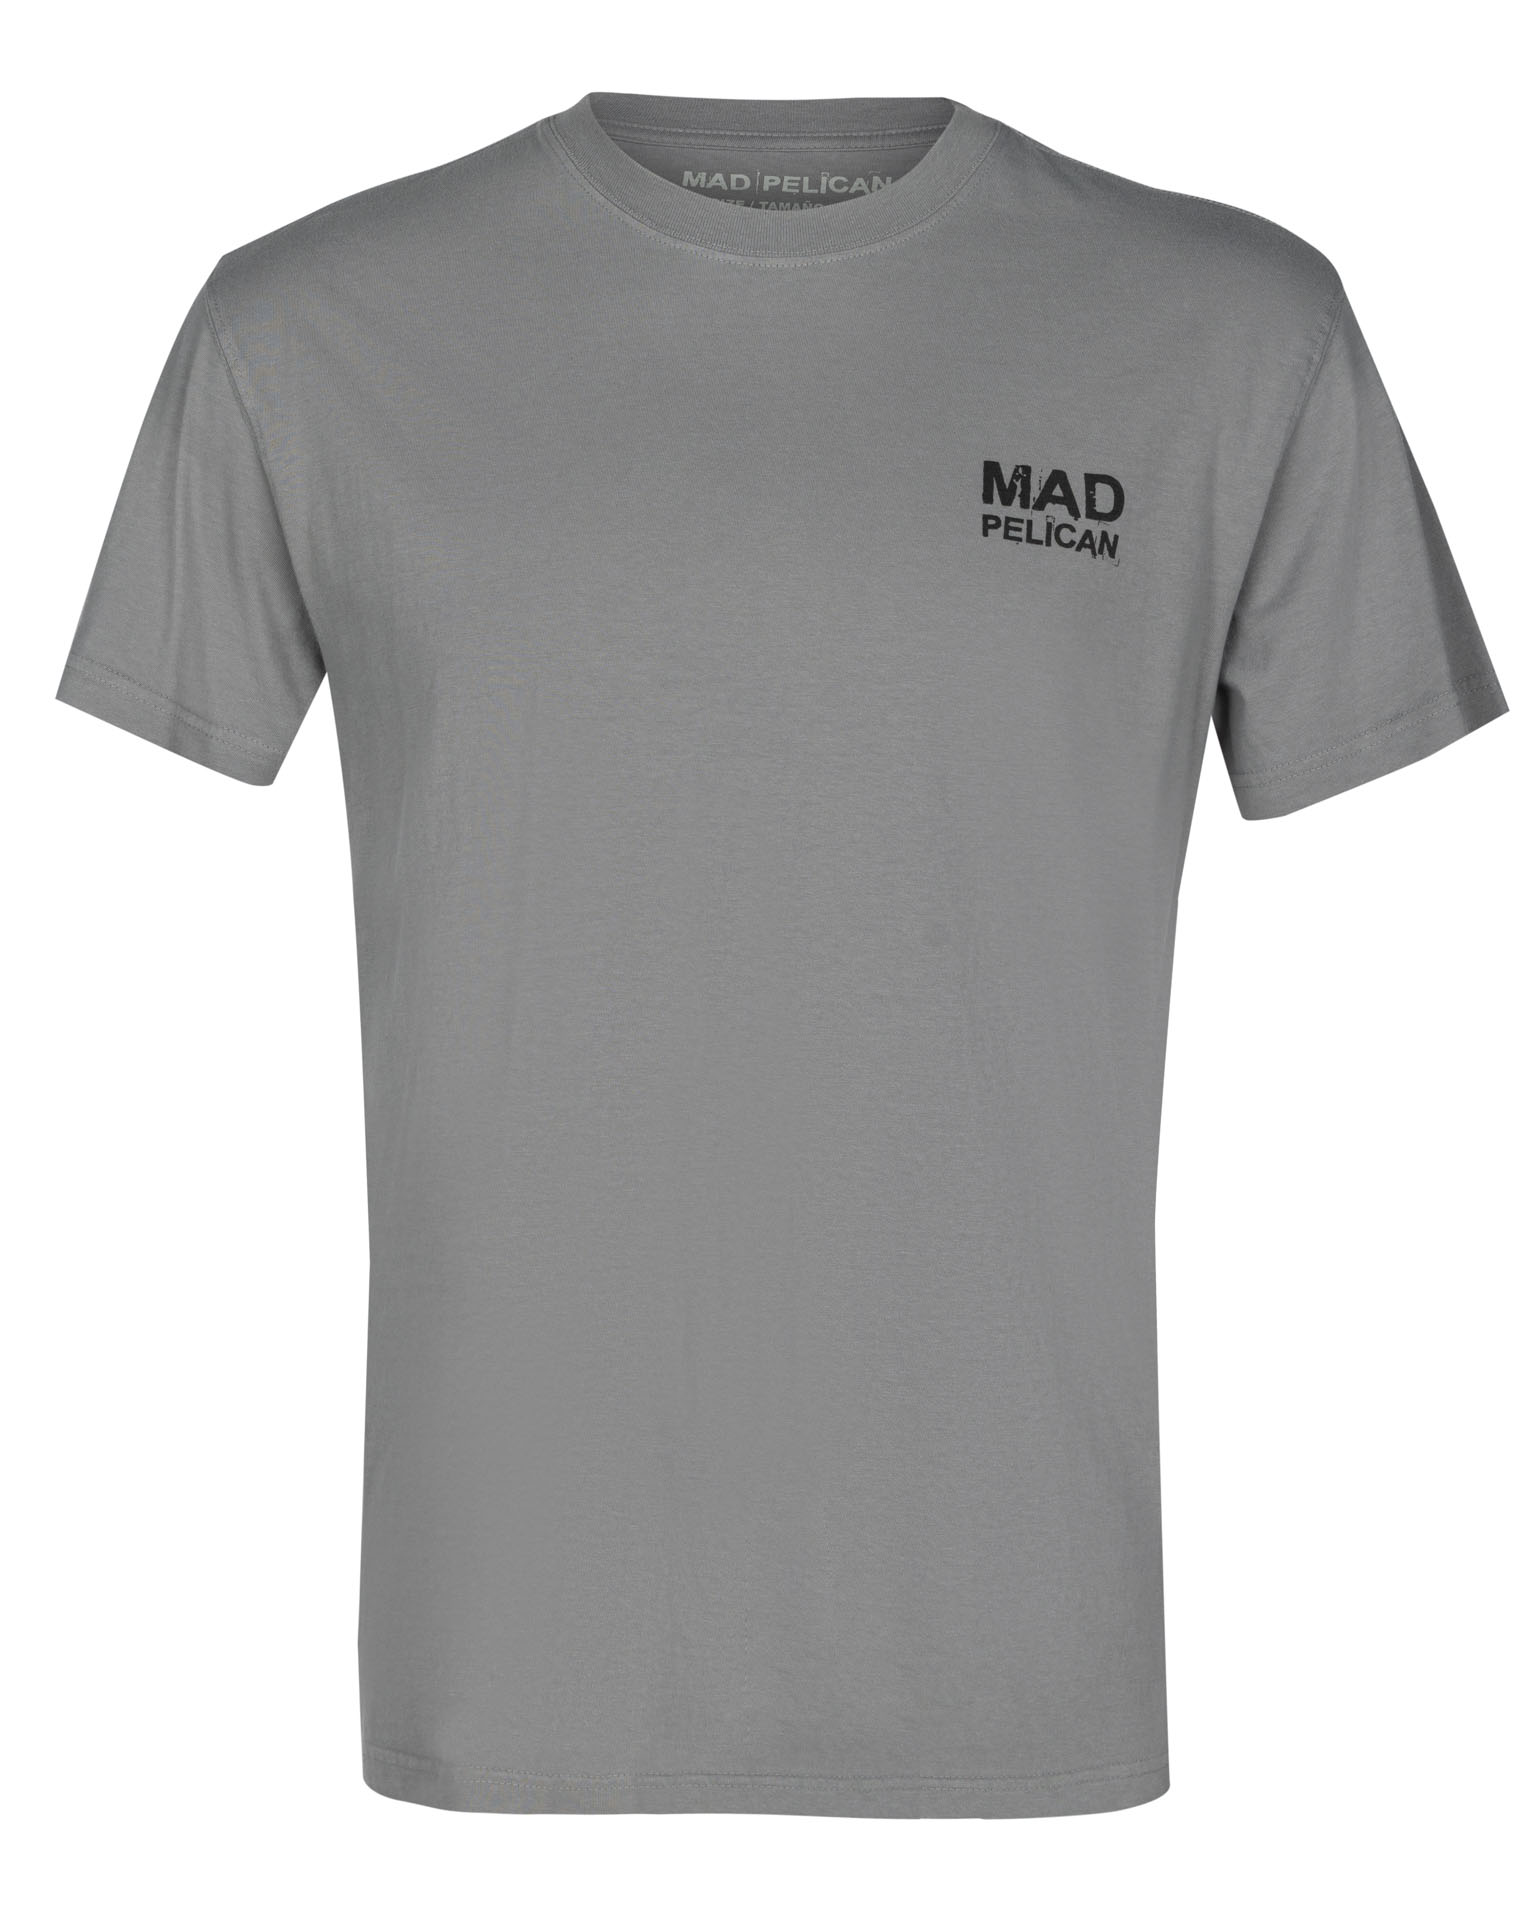 Mcm | Men's Logo Short Sleeve T-Shirt, Black / XL